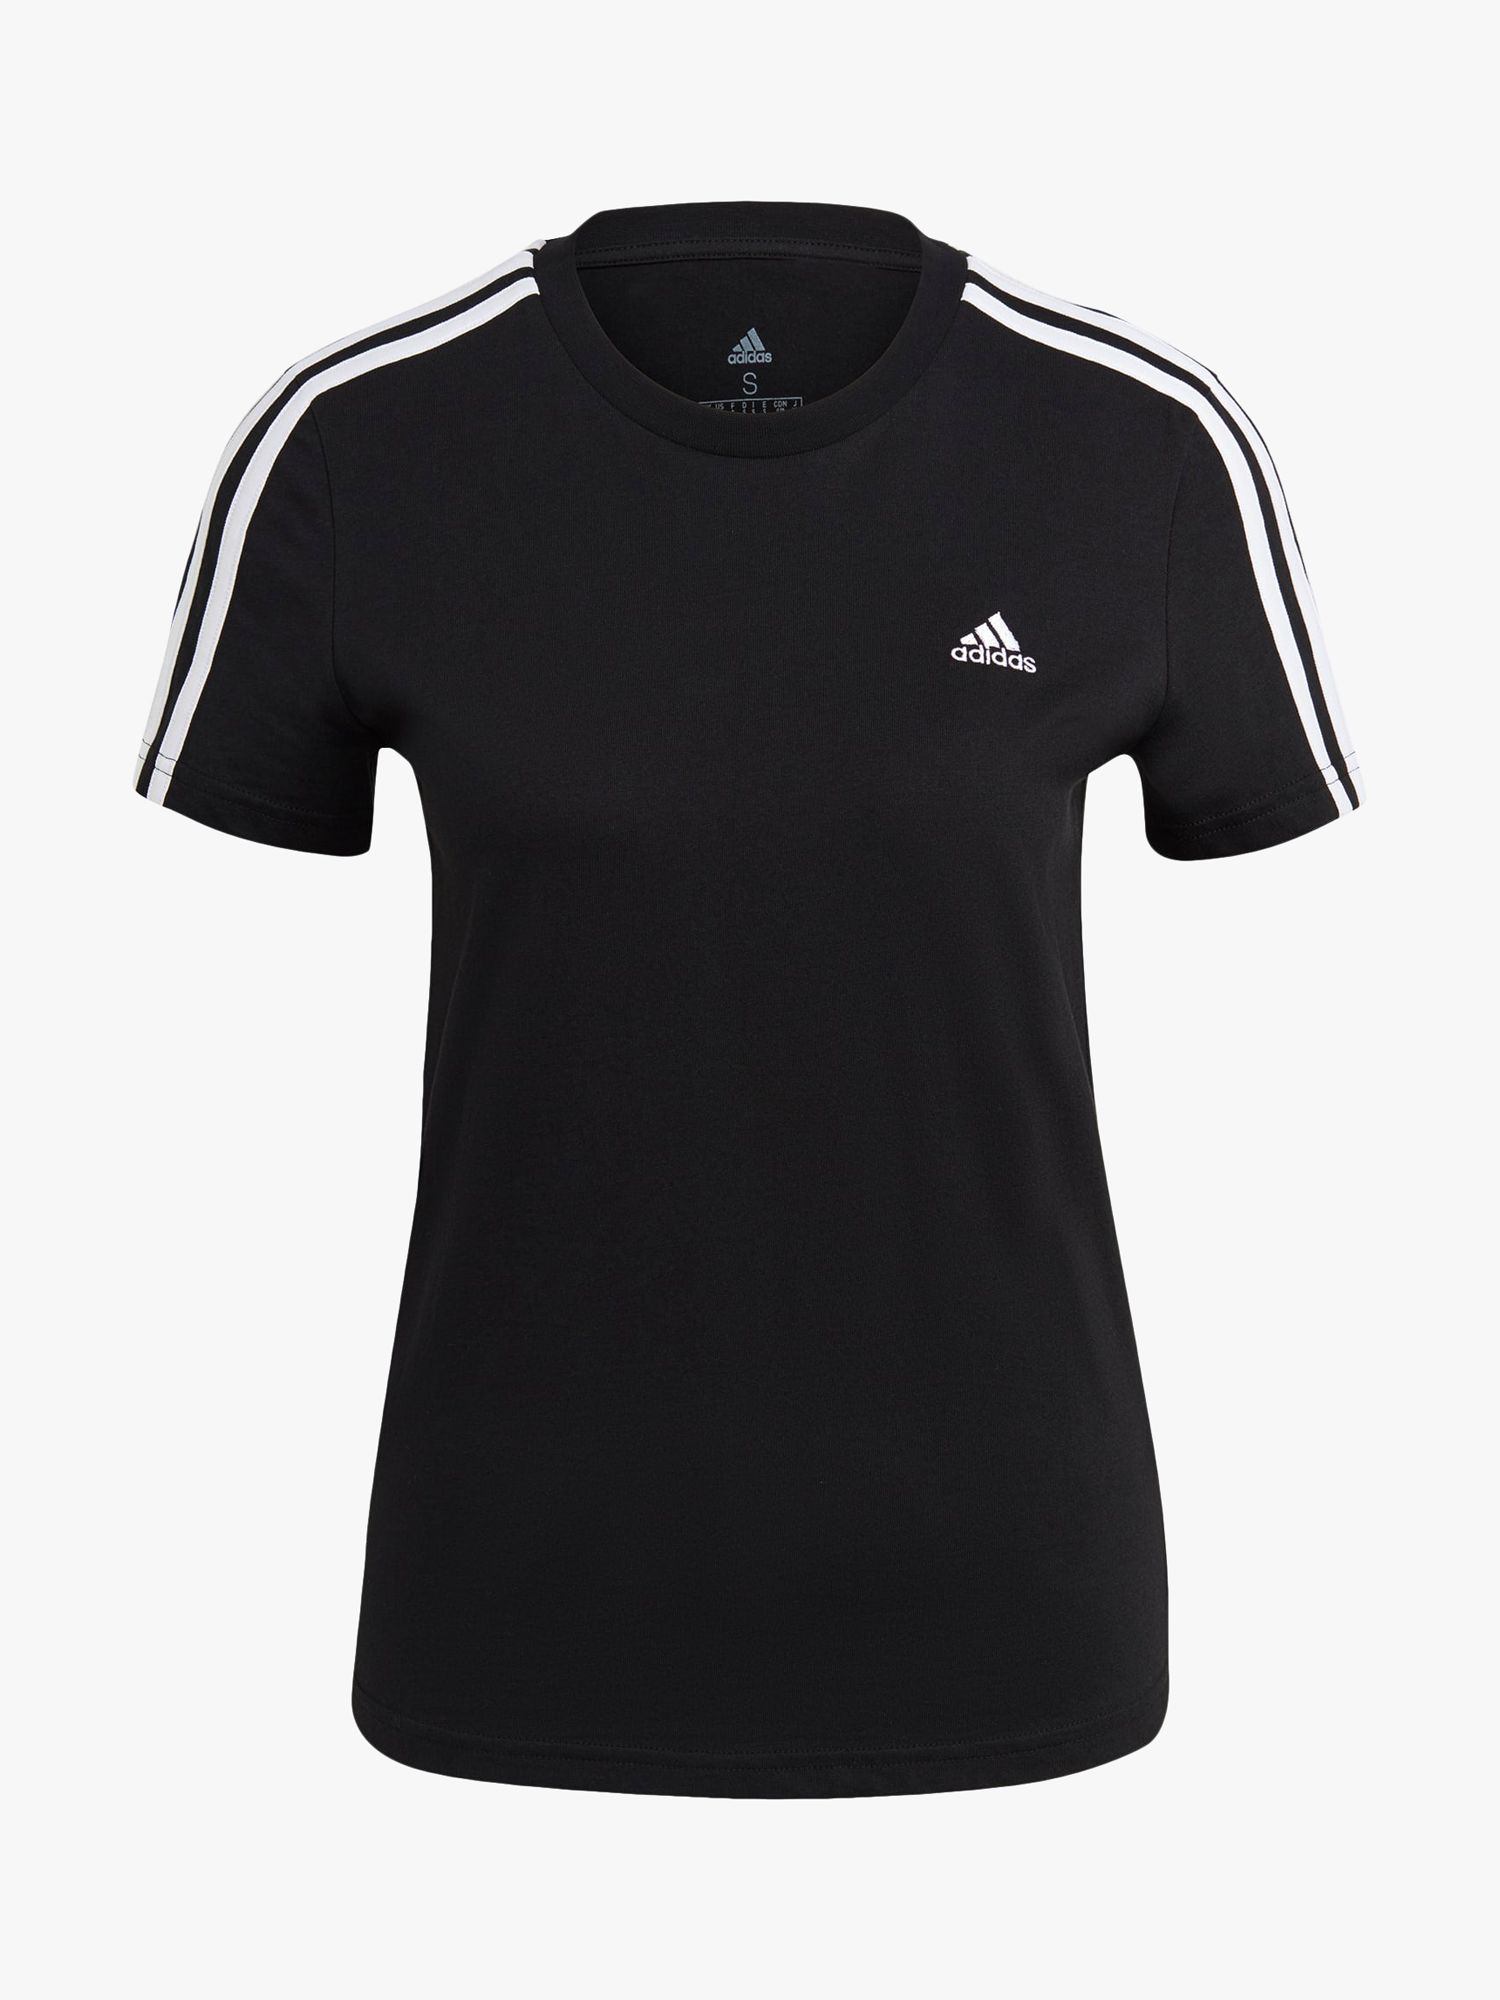 adidas LOUNGEWEAR Essentials Slim 3-Stripes T-Shirt, Black/White, XS